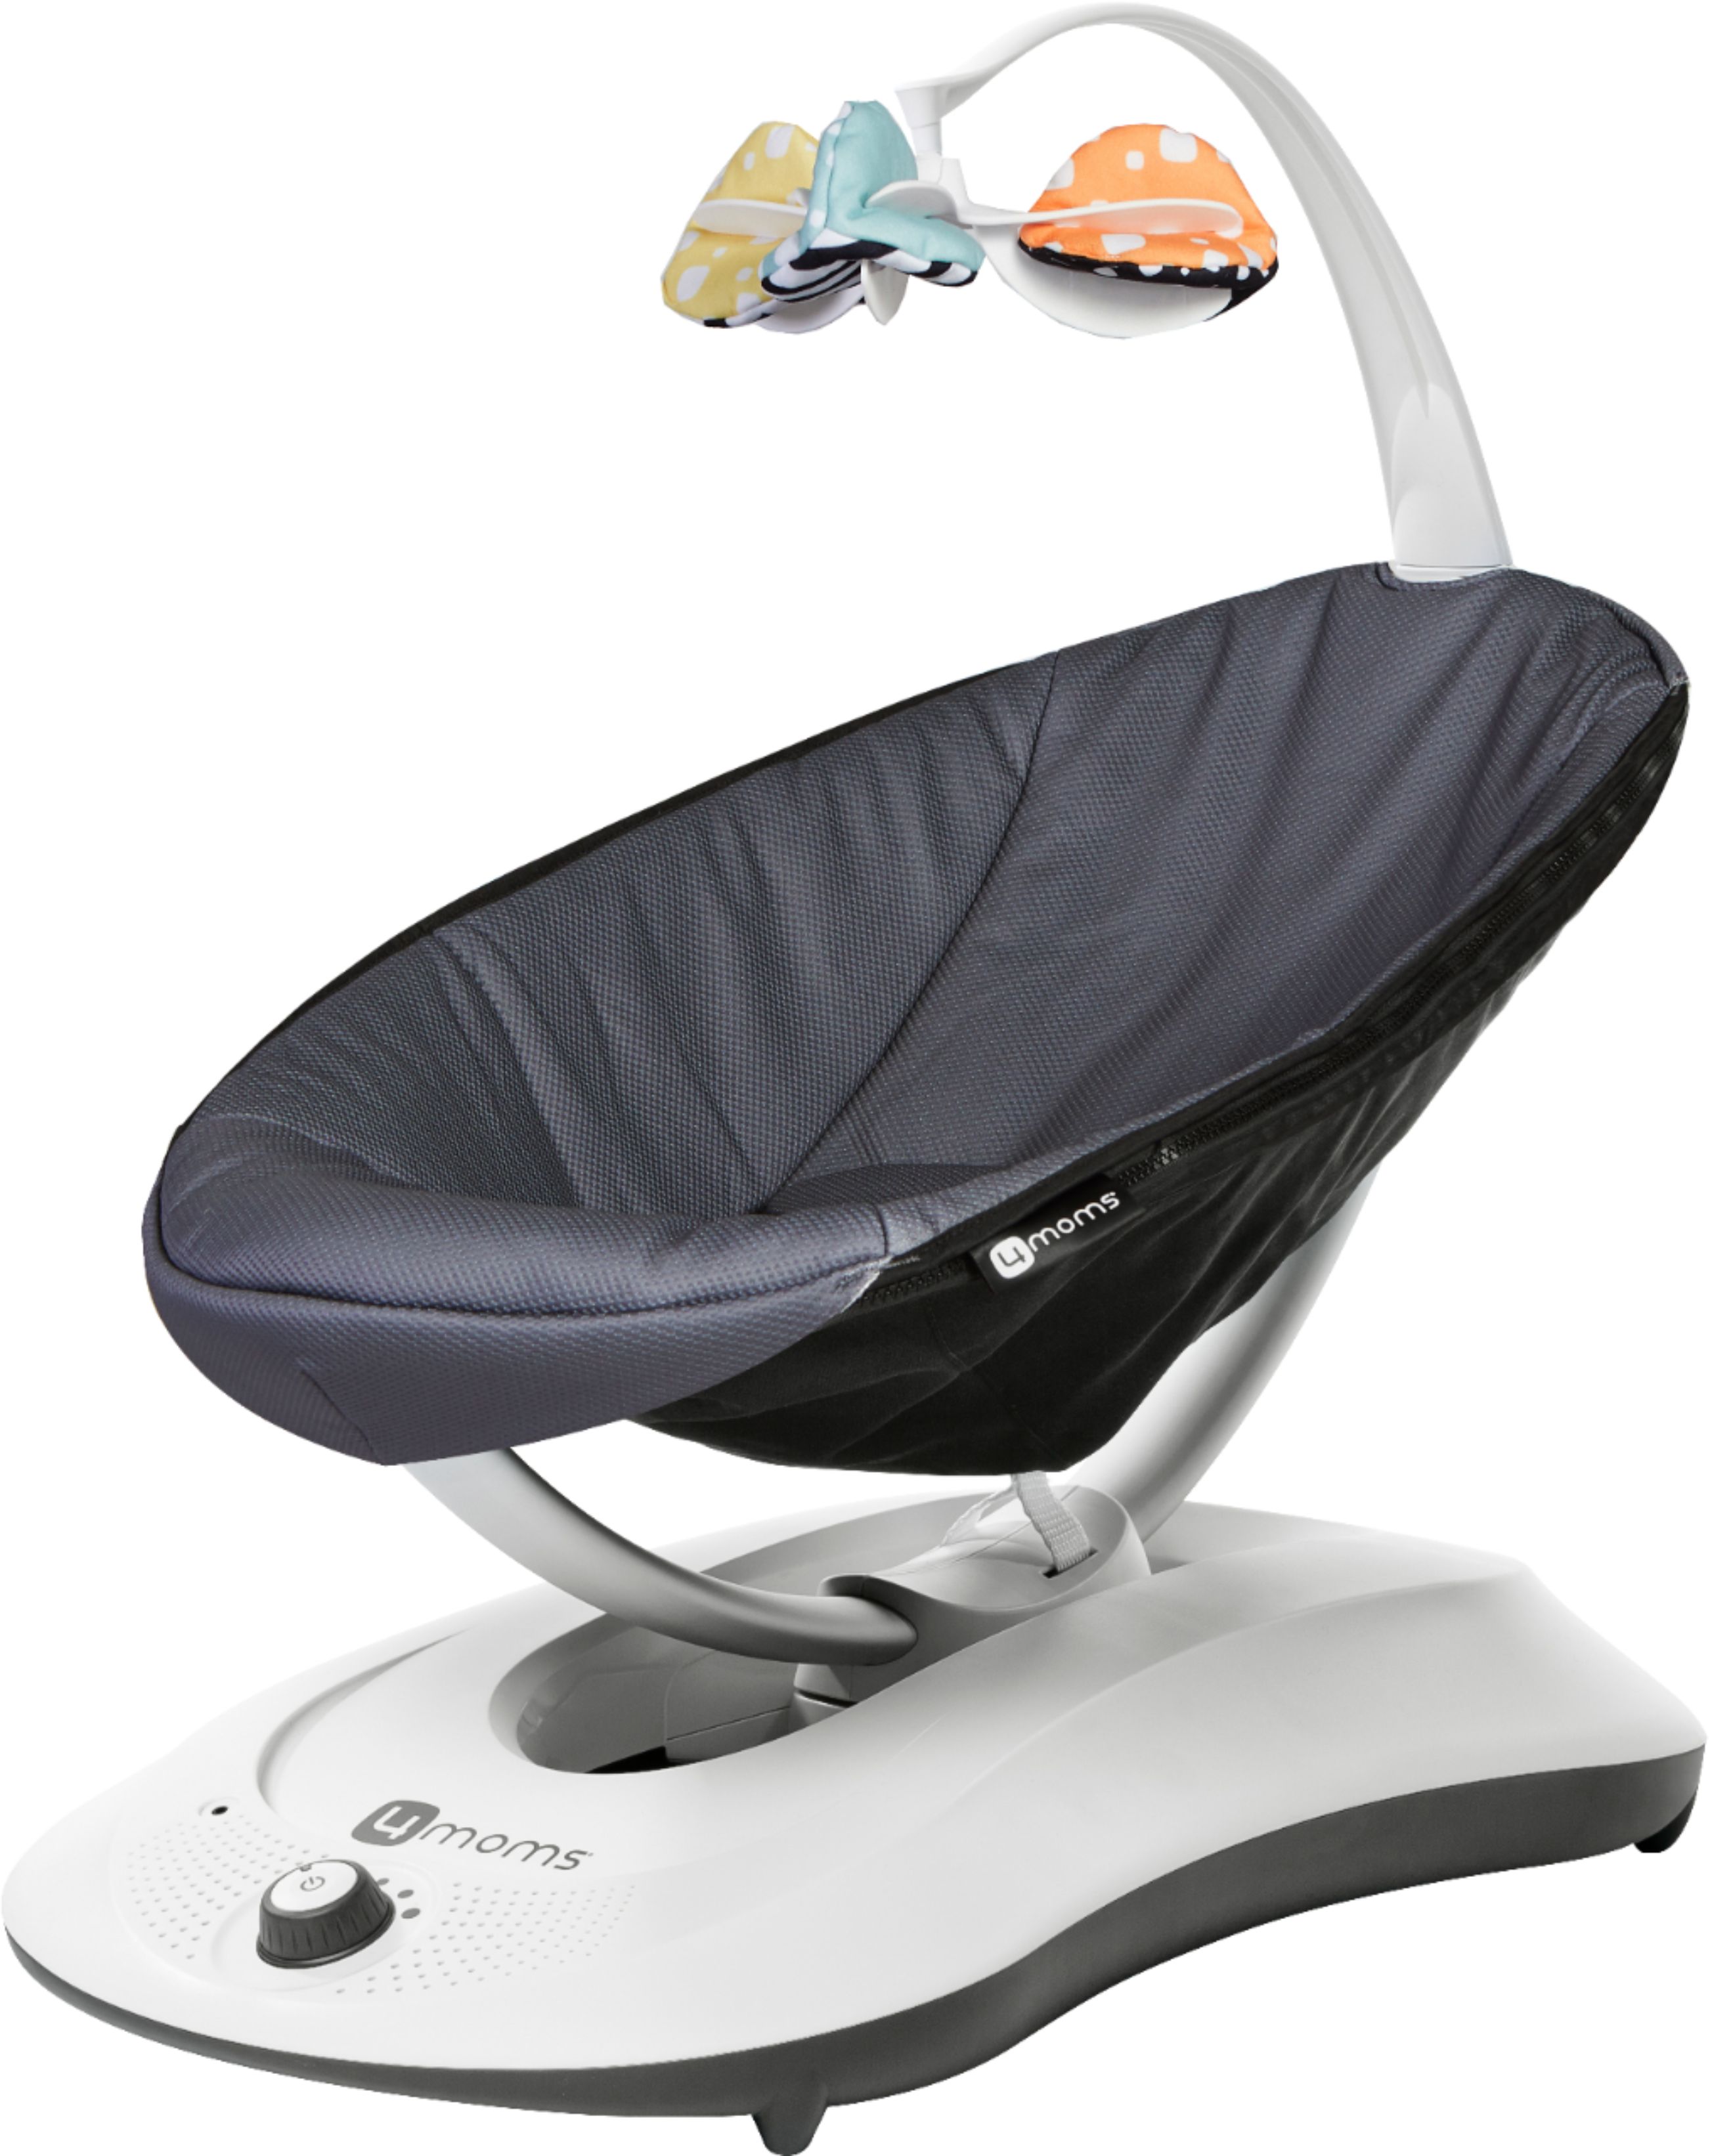 Left View: 4moms® rockaRoo® infant seat | Compact Baby Swing | Dark Grey Cool Mesh